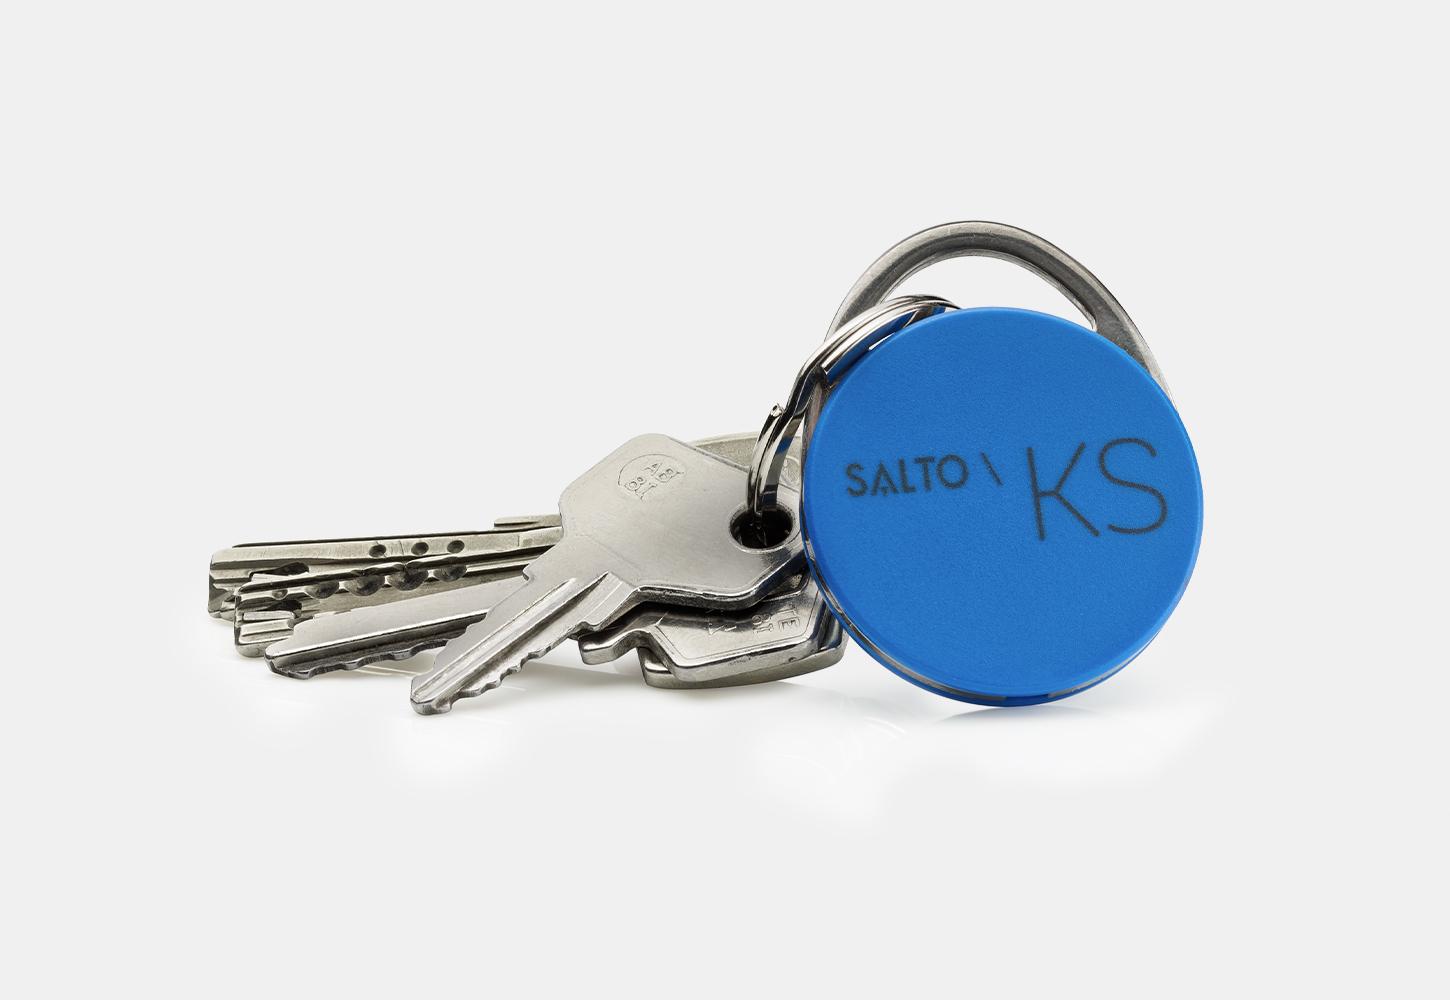 Salto KS - Smart keycard